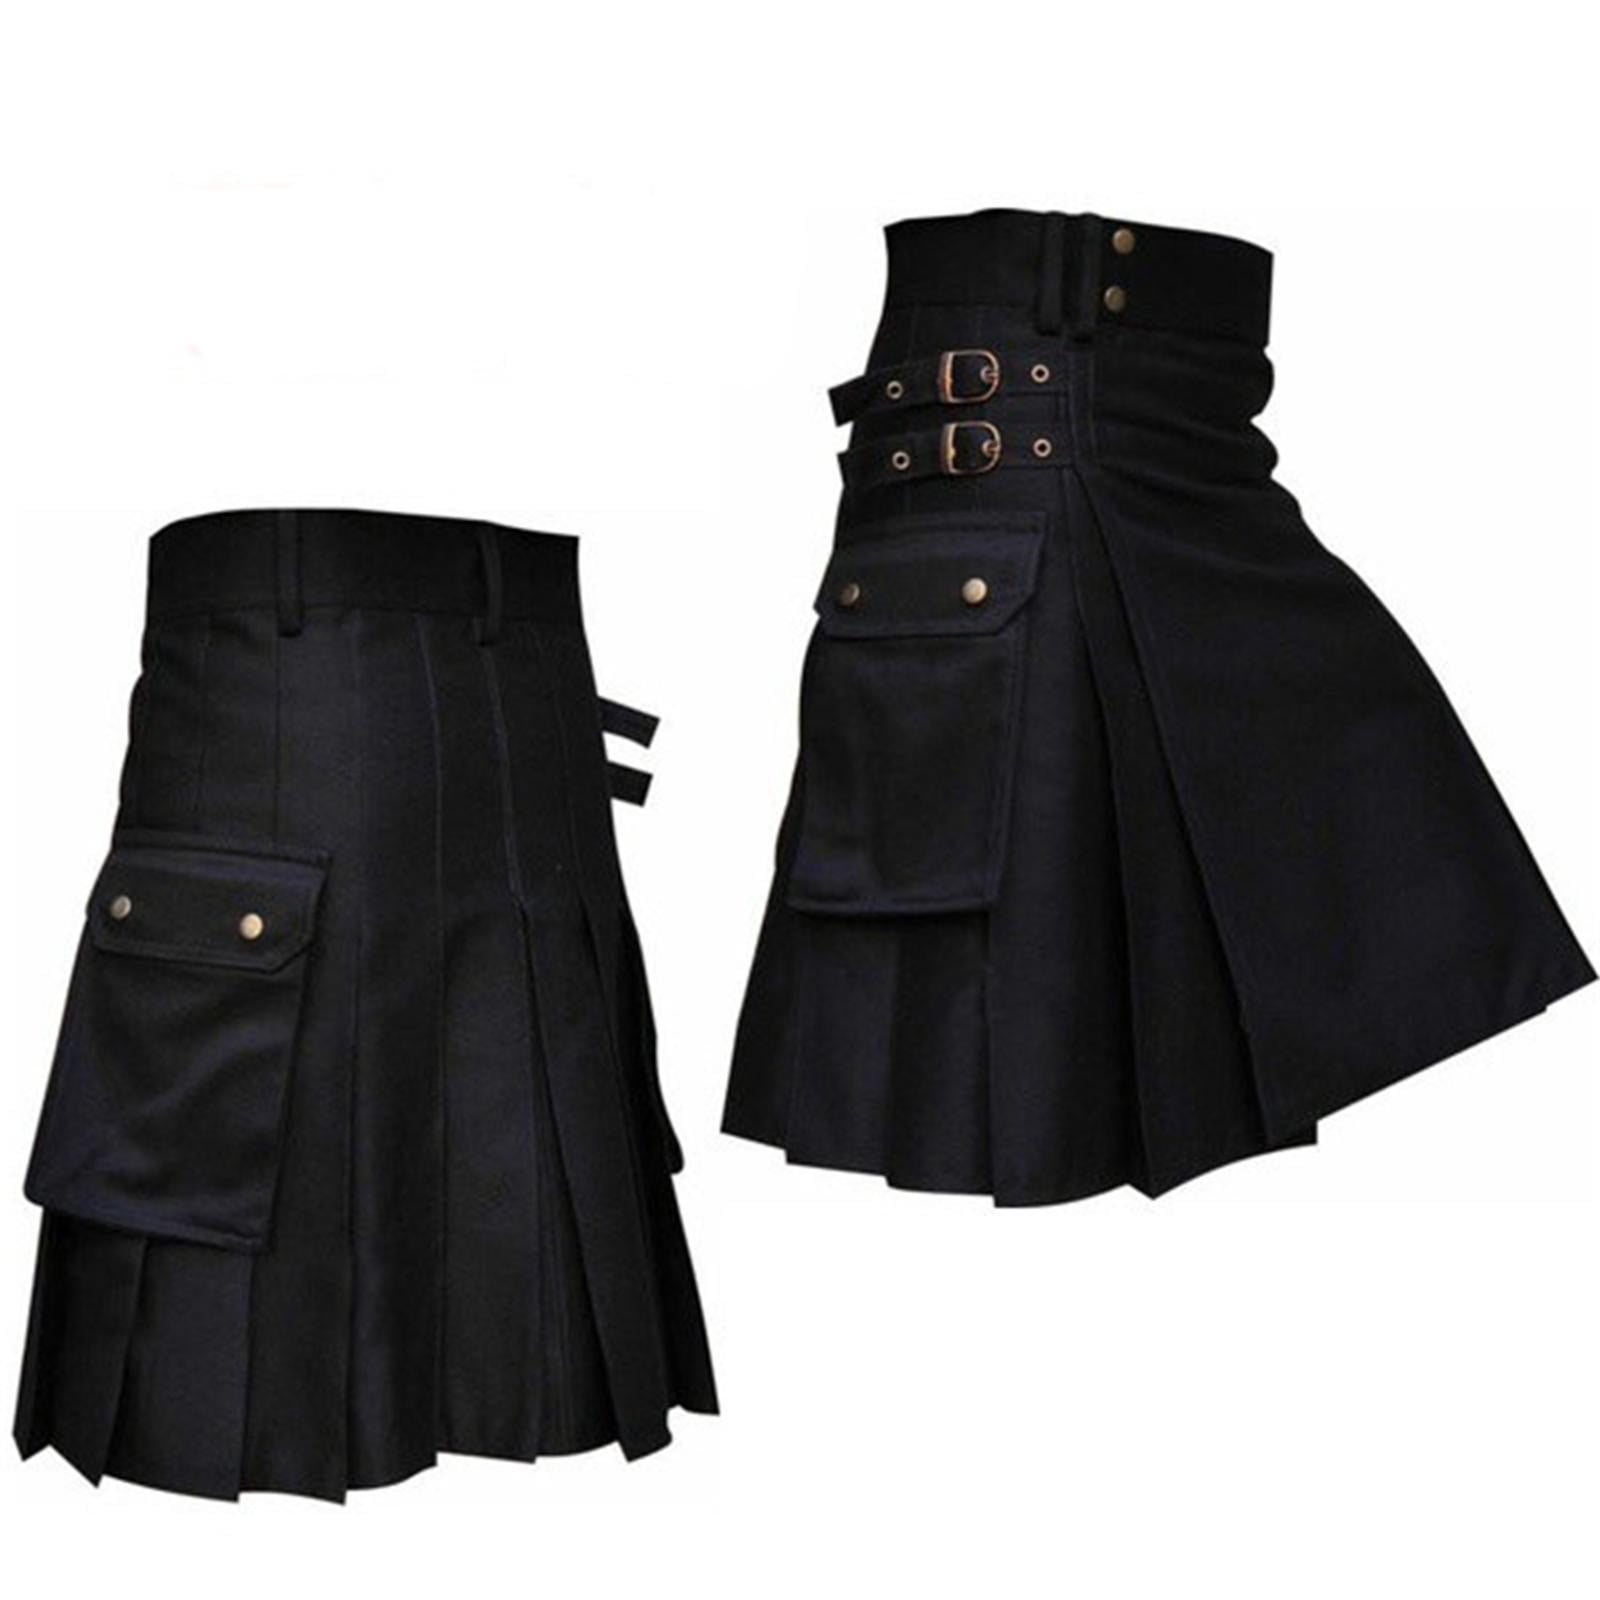 Adjustable Sizes Men's Black Leather Straps Fashion Sport Utility Kilt 